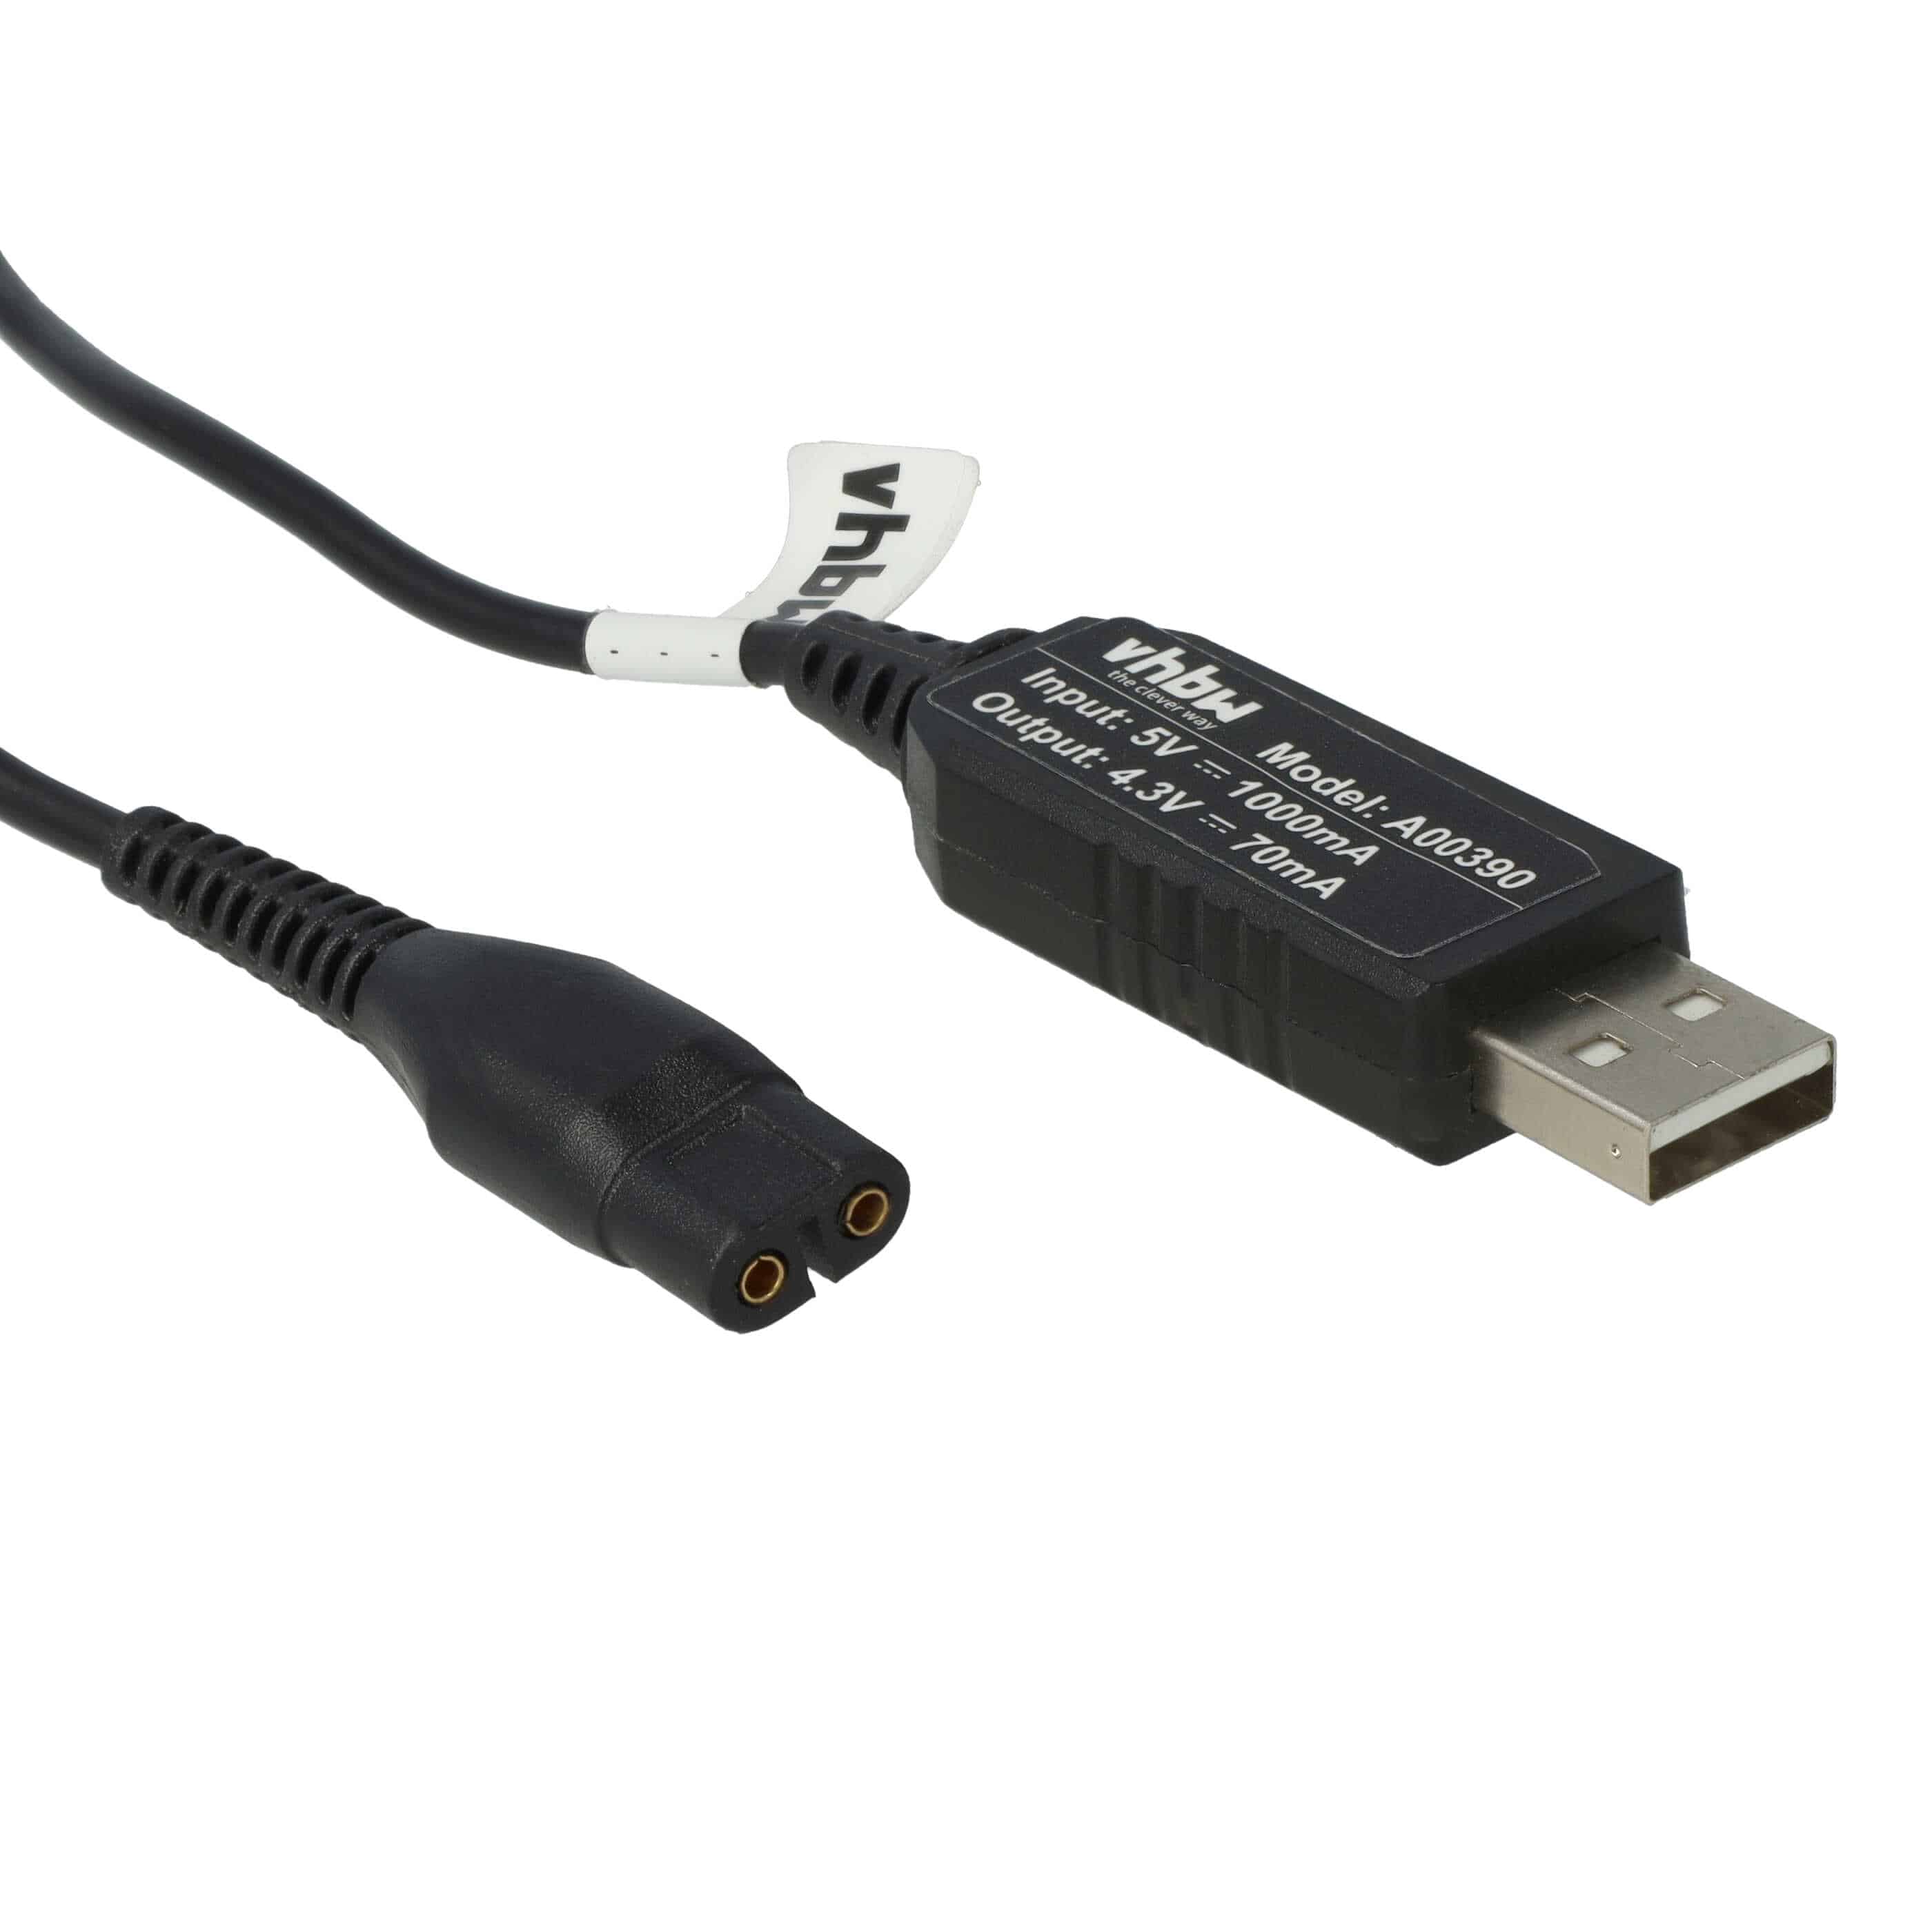 Caricabatterie USB per rasoio Philips S510 - 120 cm